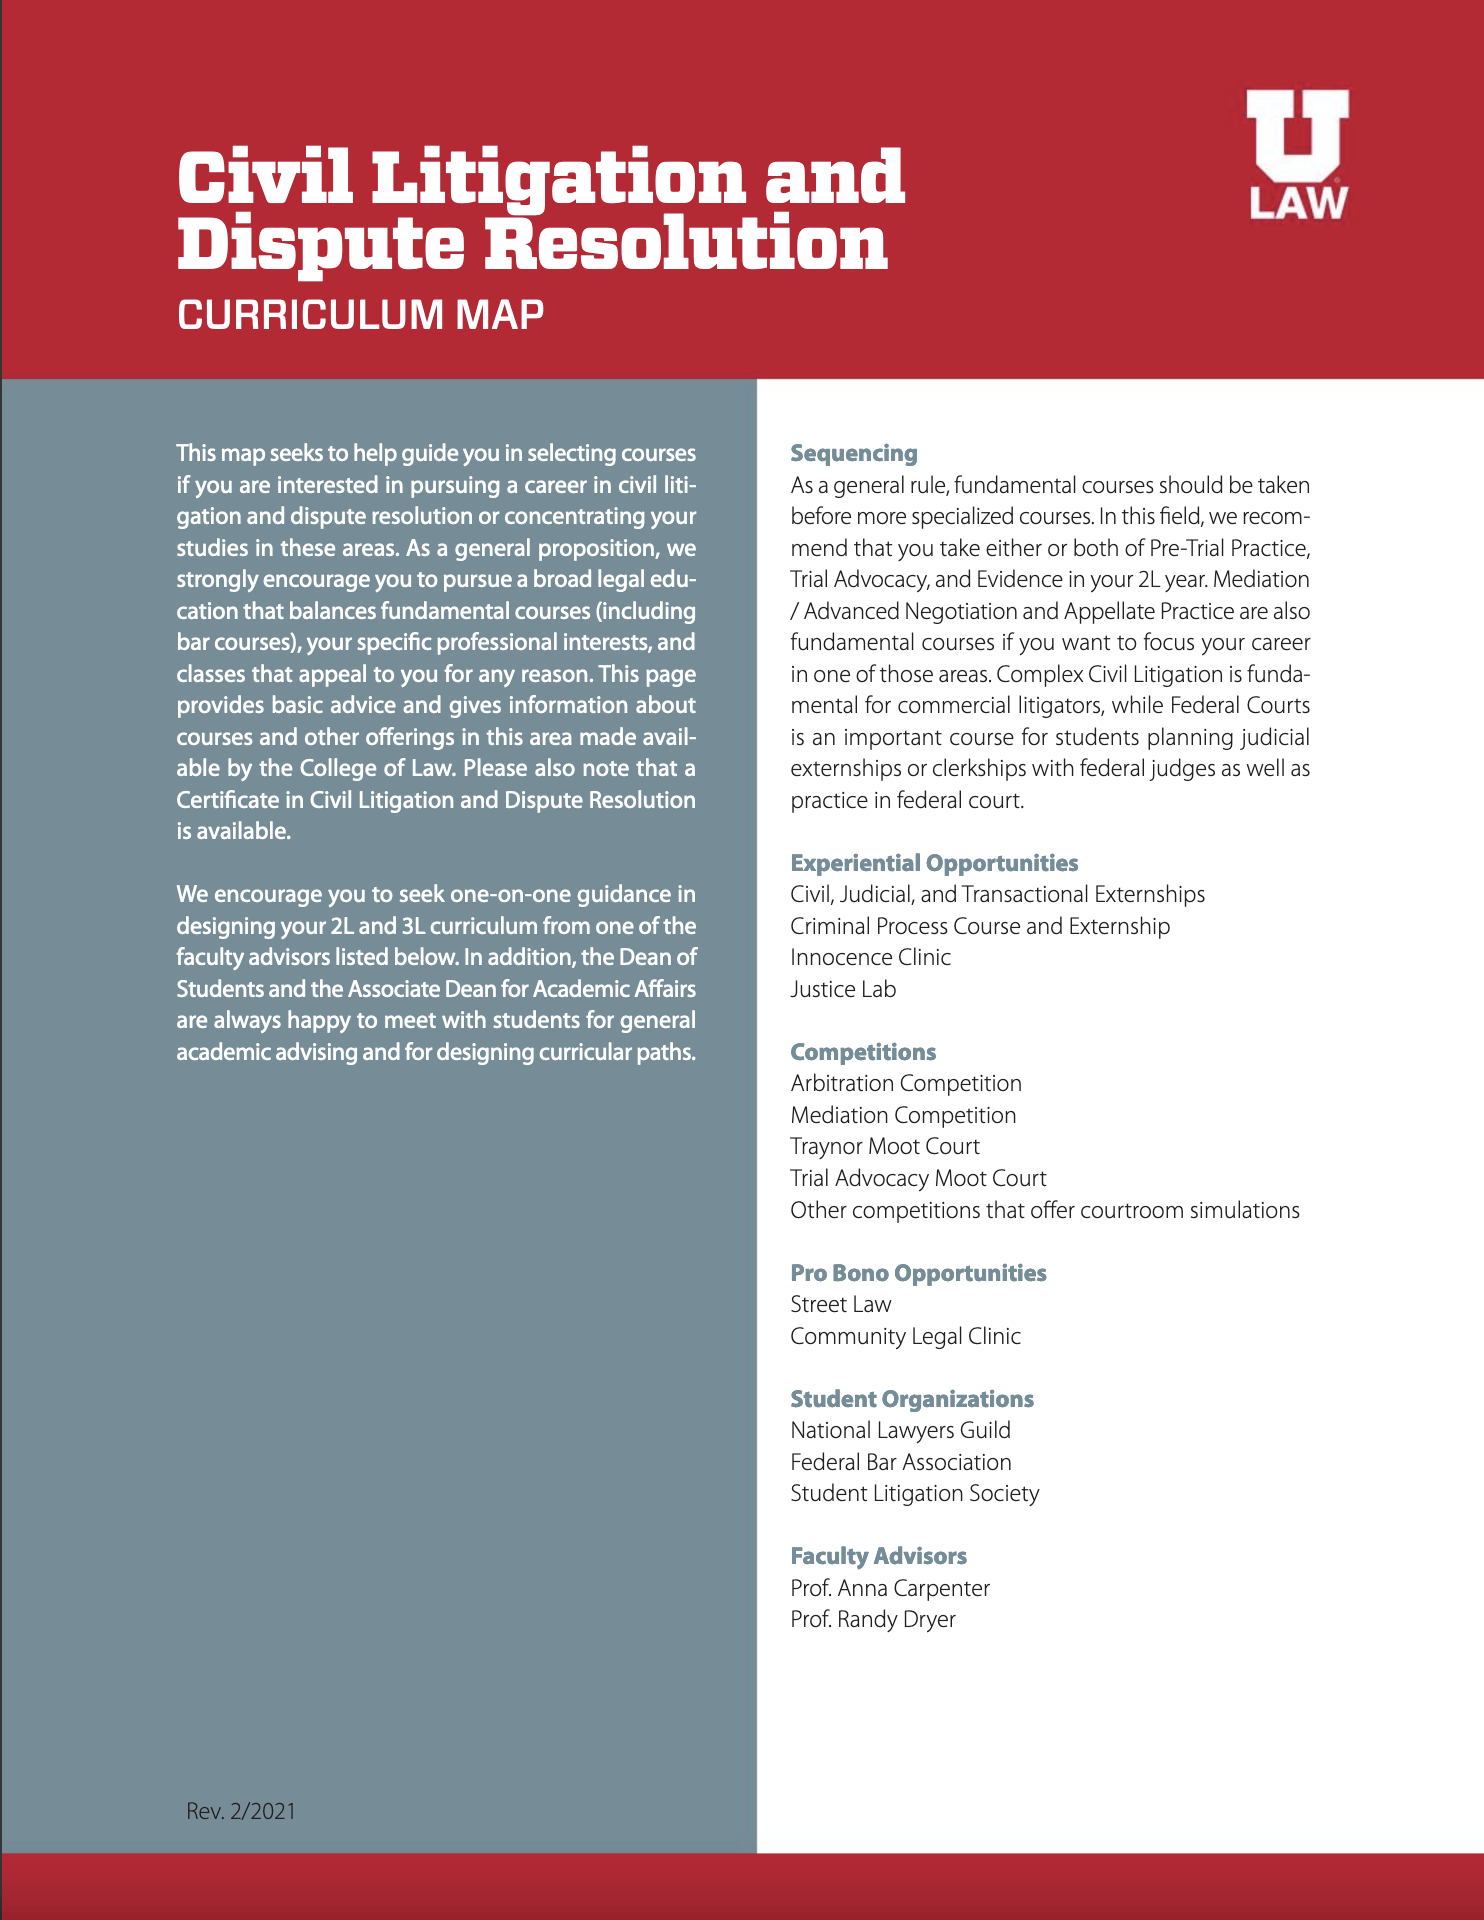 Civil Litigation and Dispute Resolution Curriculum Map